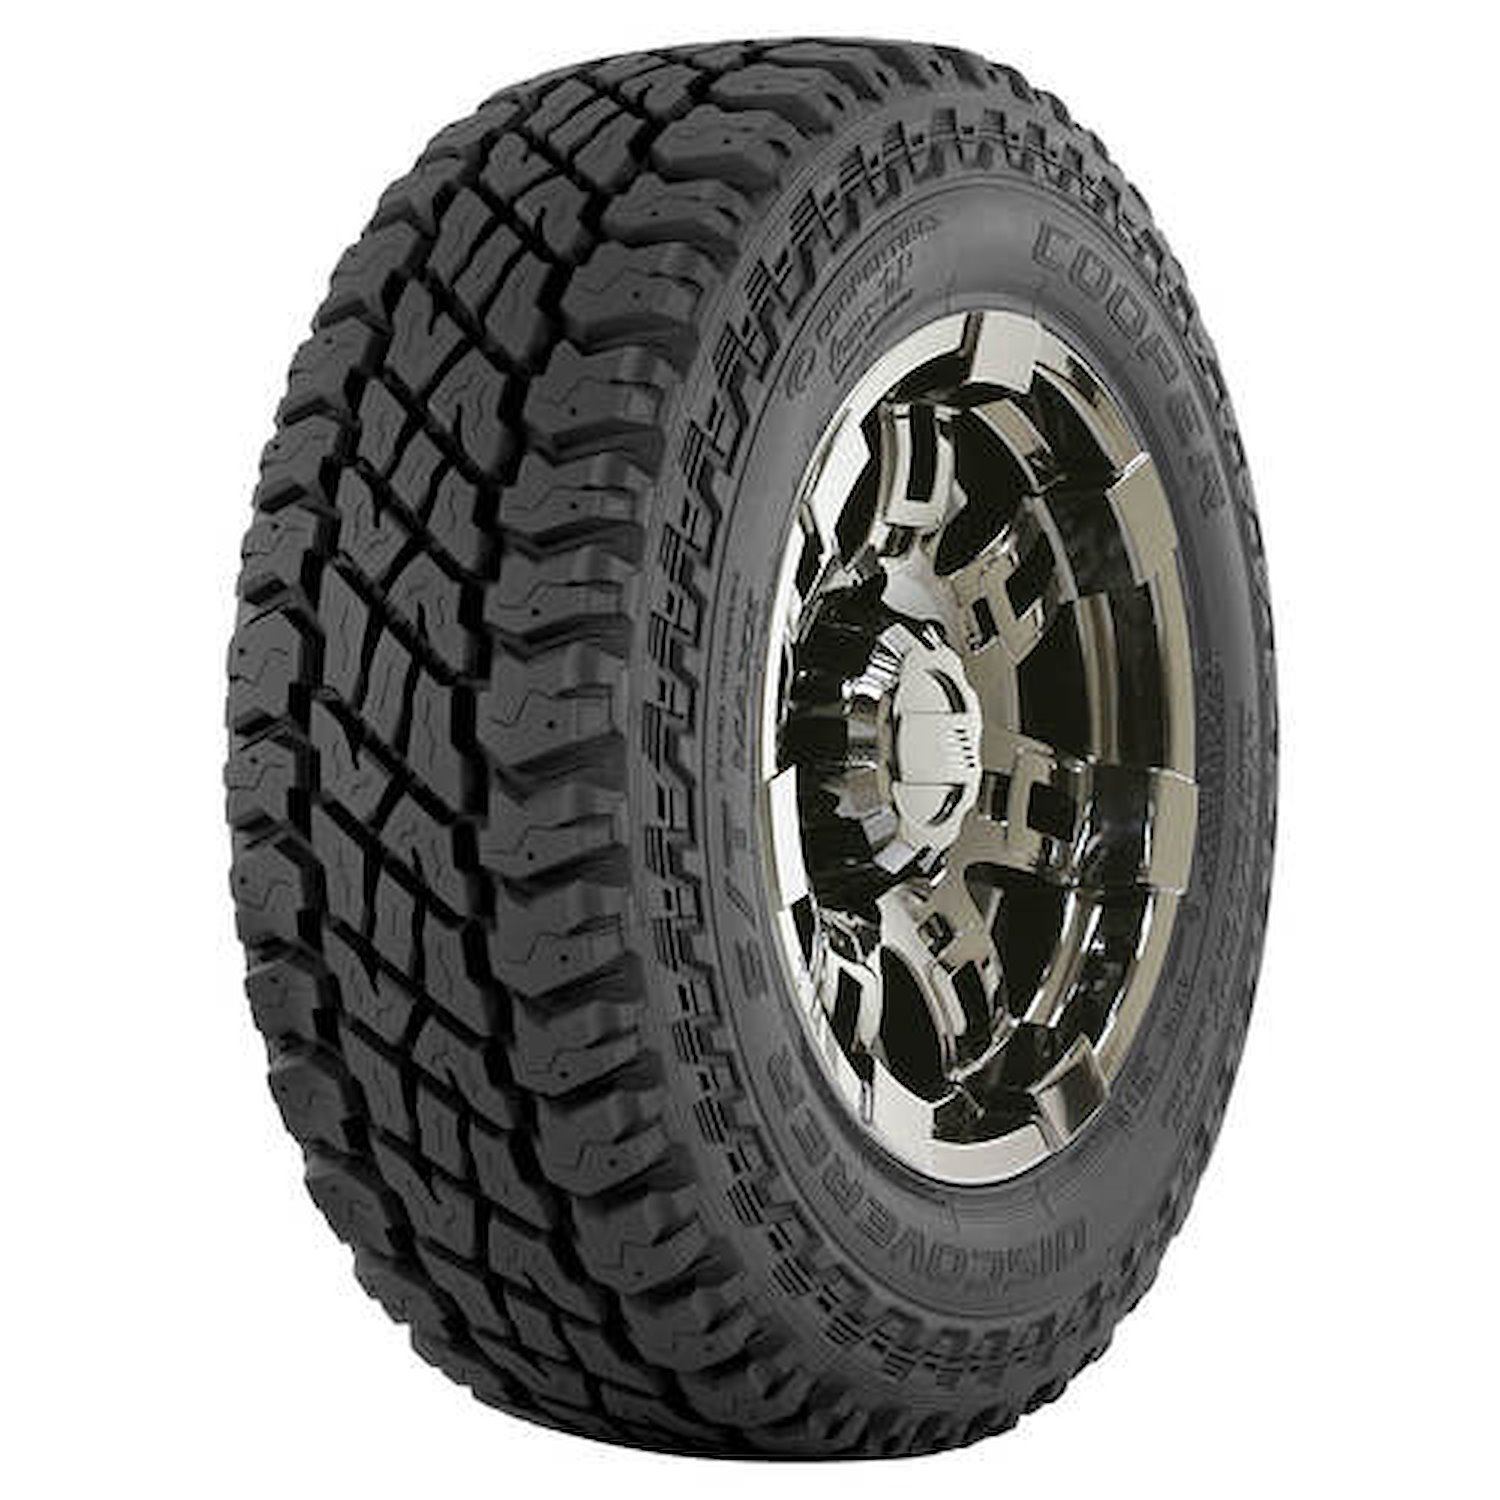 Discoverer S/T Maxx All-Terrain Tire, LT275/65R18